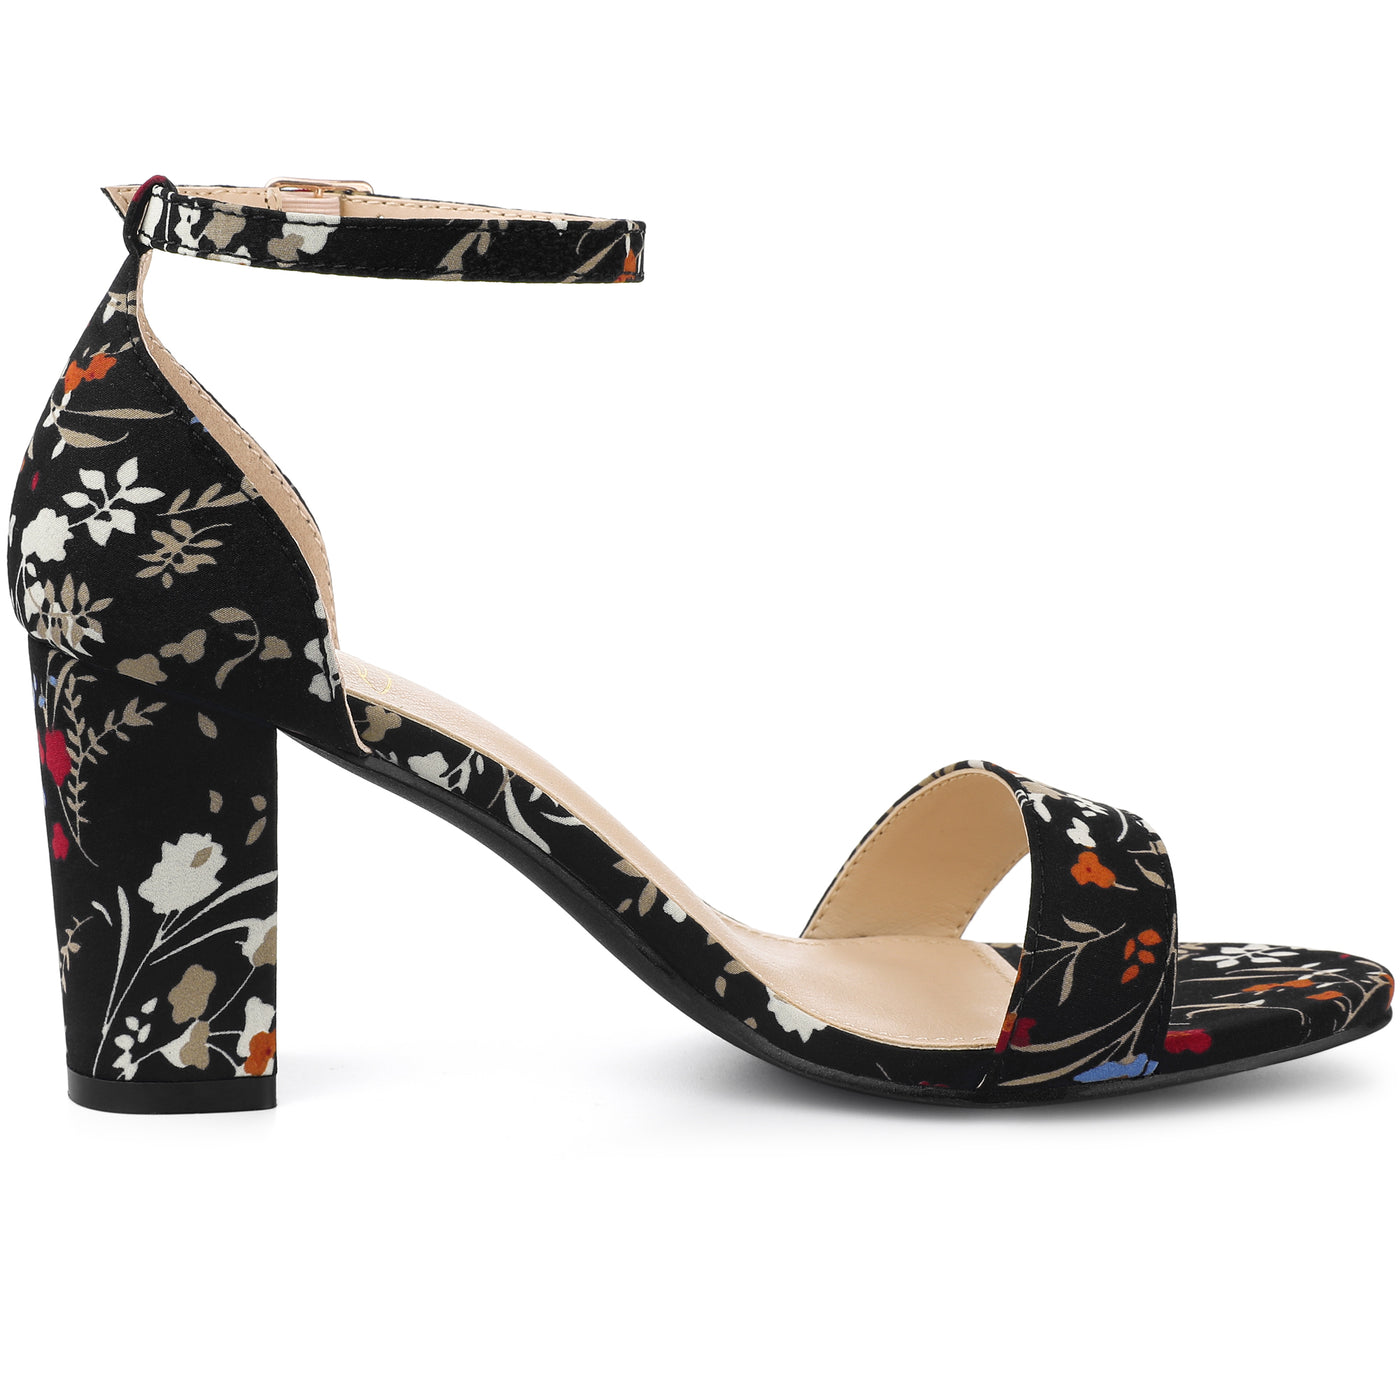 floral heels: Women's Shoes | Dillard's